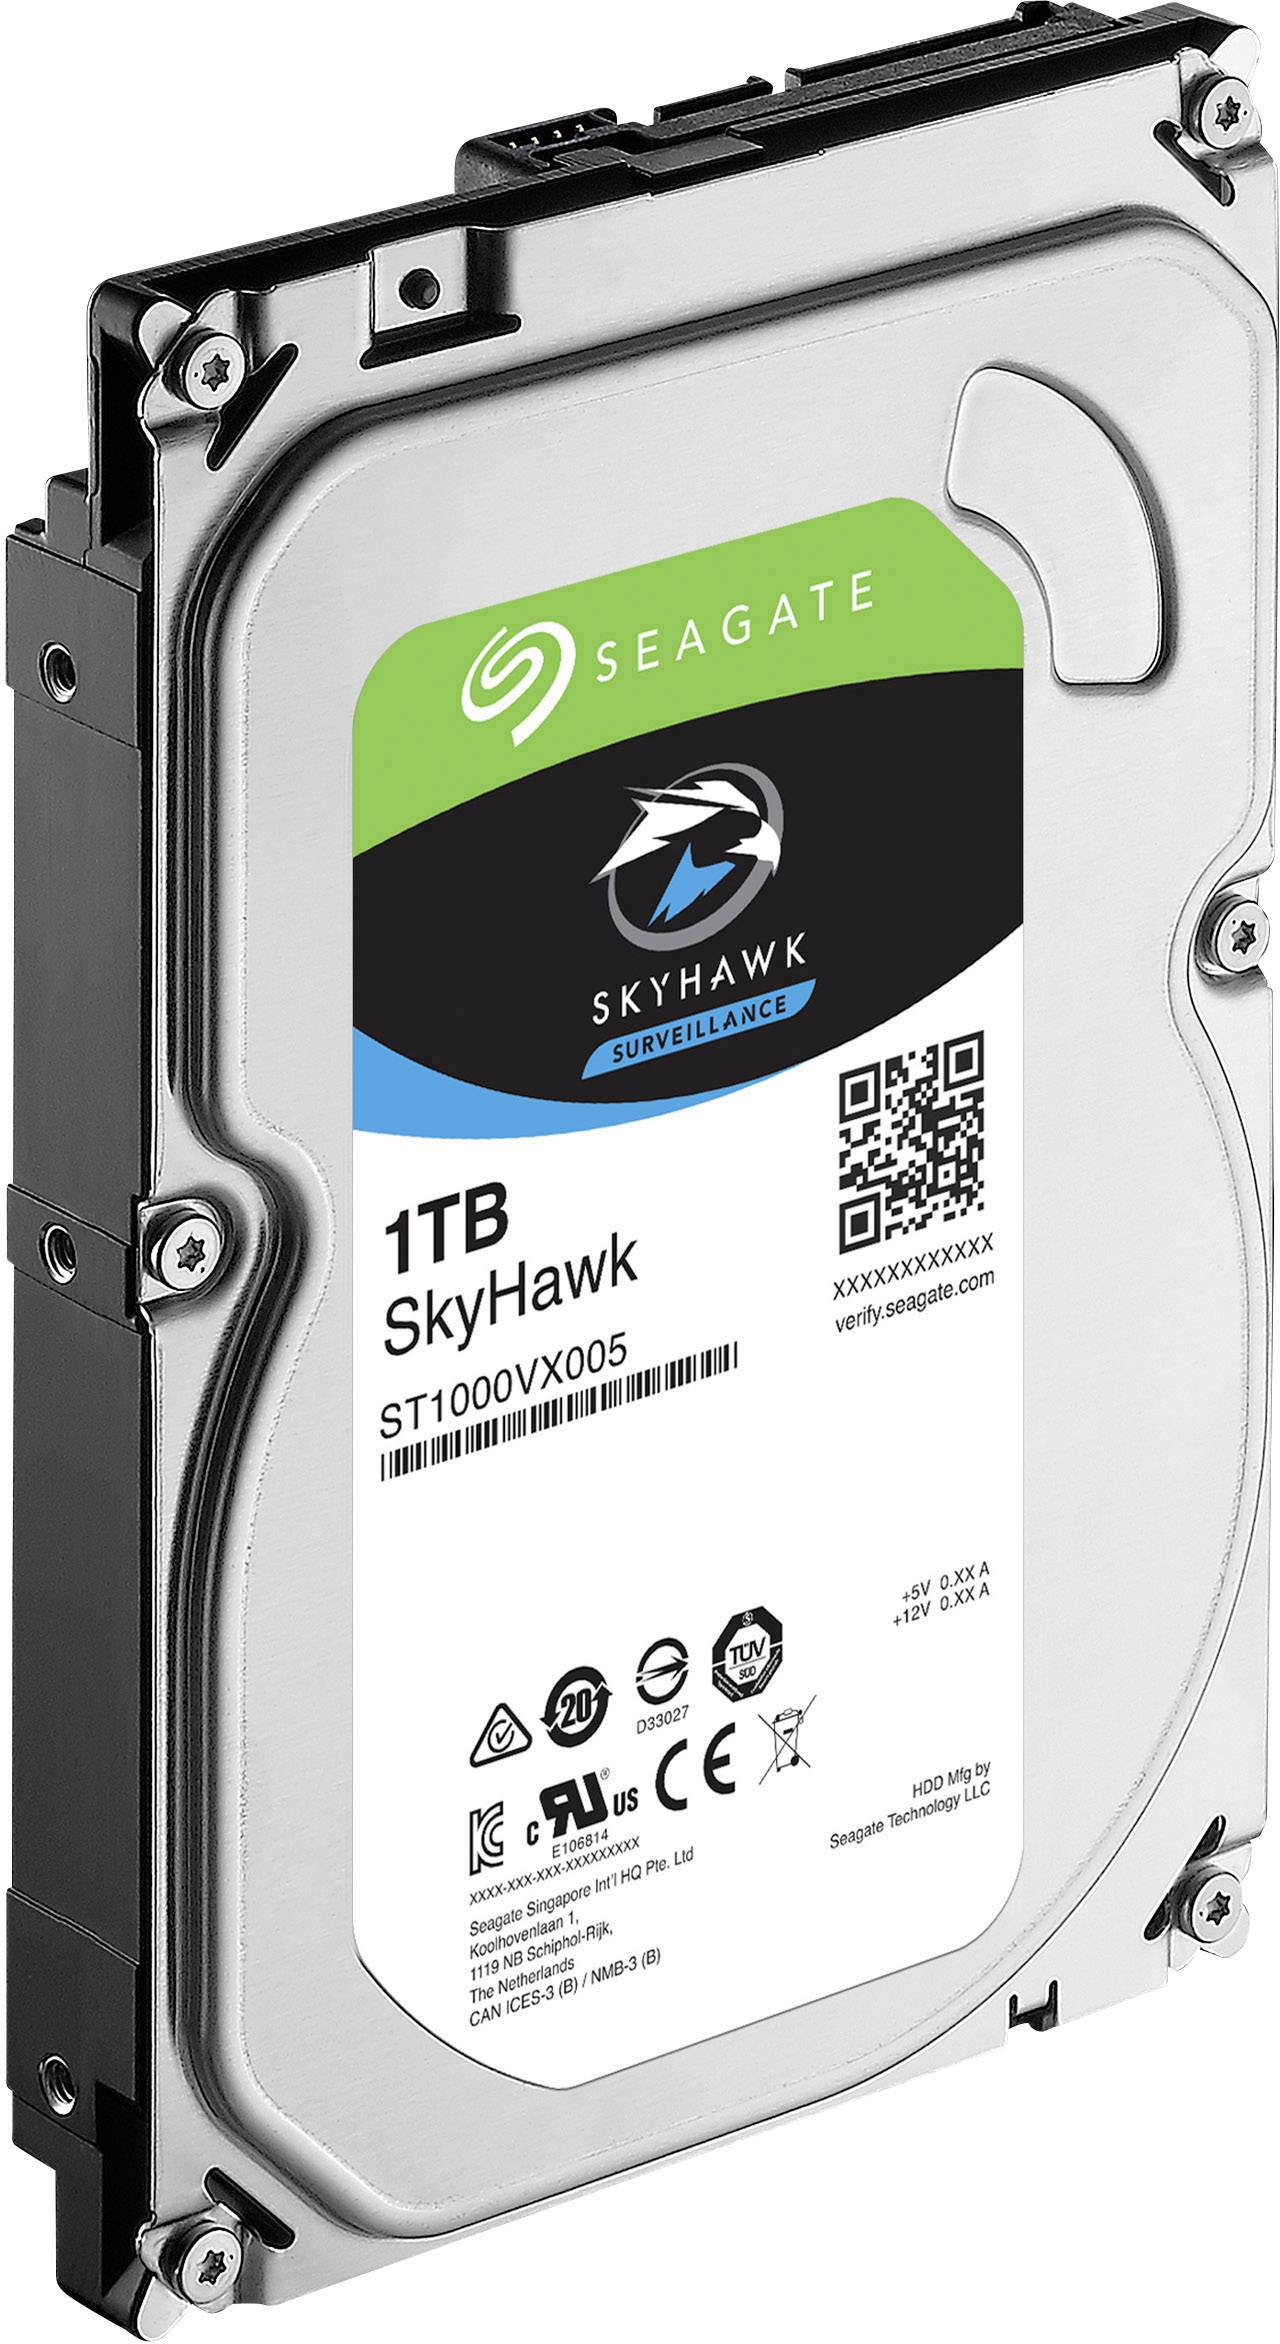 Seagate ST1000VX005 1TB SkyHawk 3.5" SATA3 Surveillance Hard Drive 